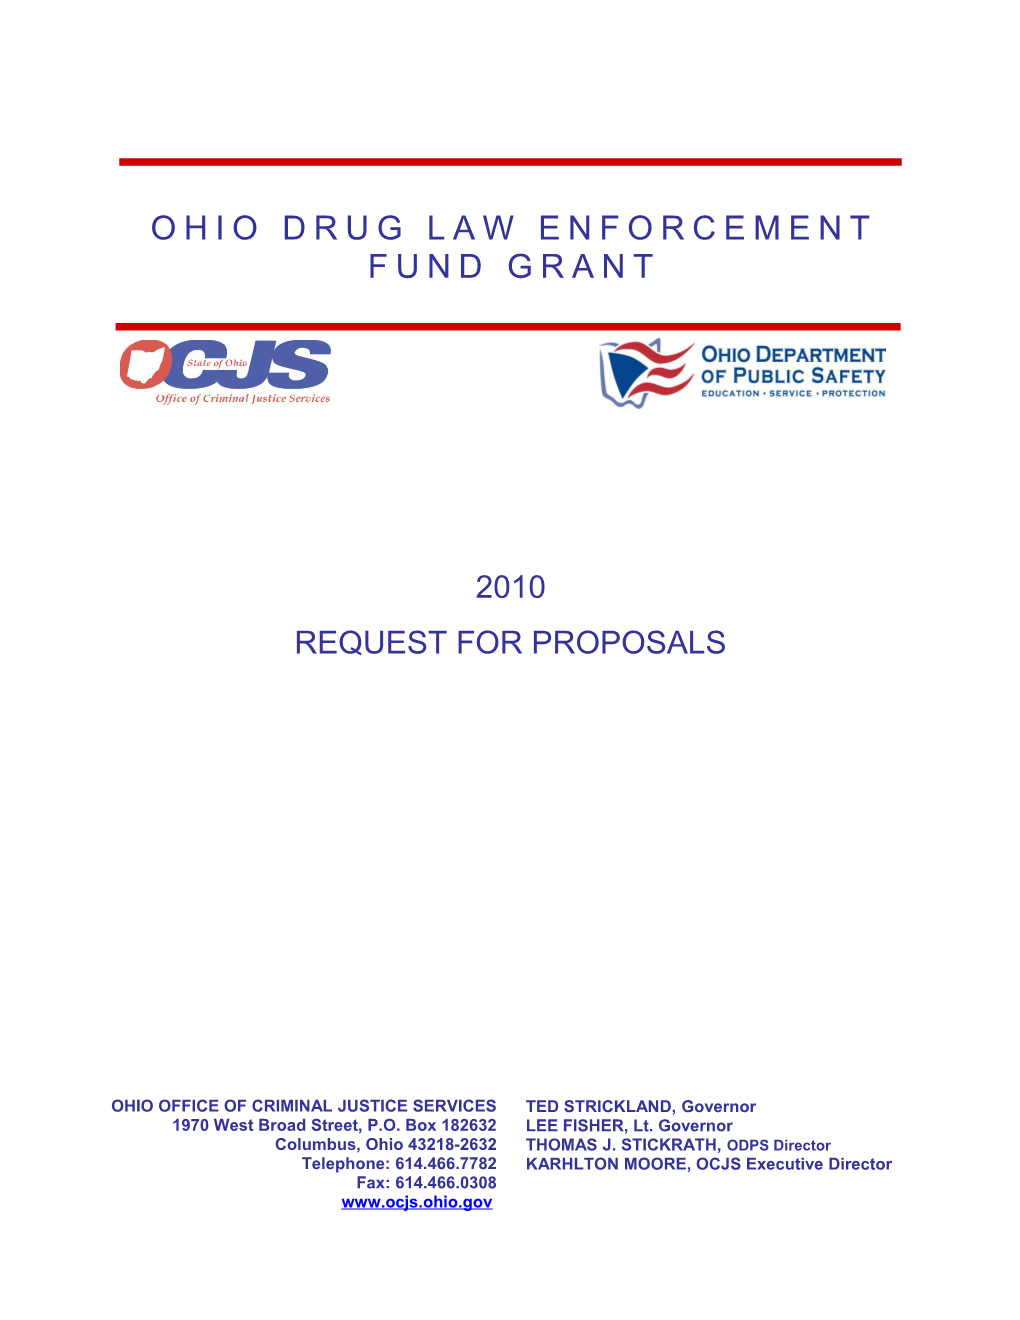 Ohio Drug Law Enforcement Fund Grant